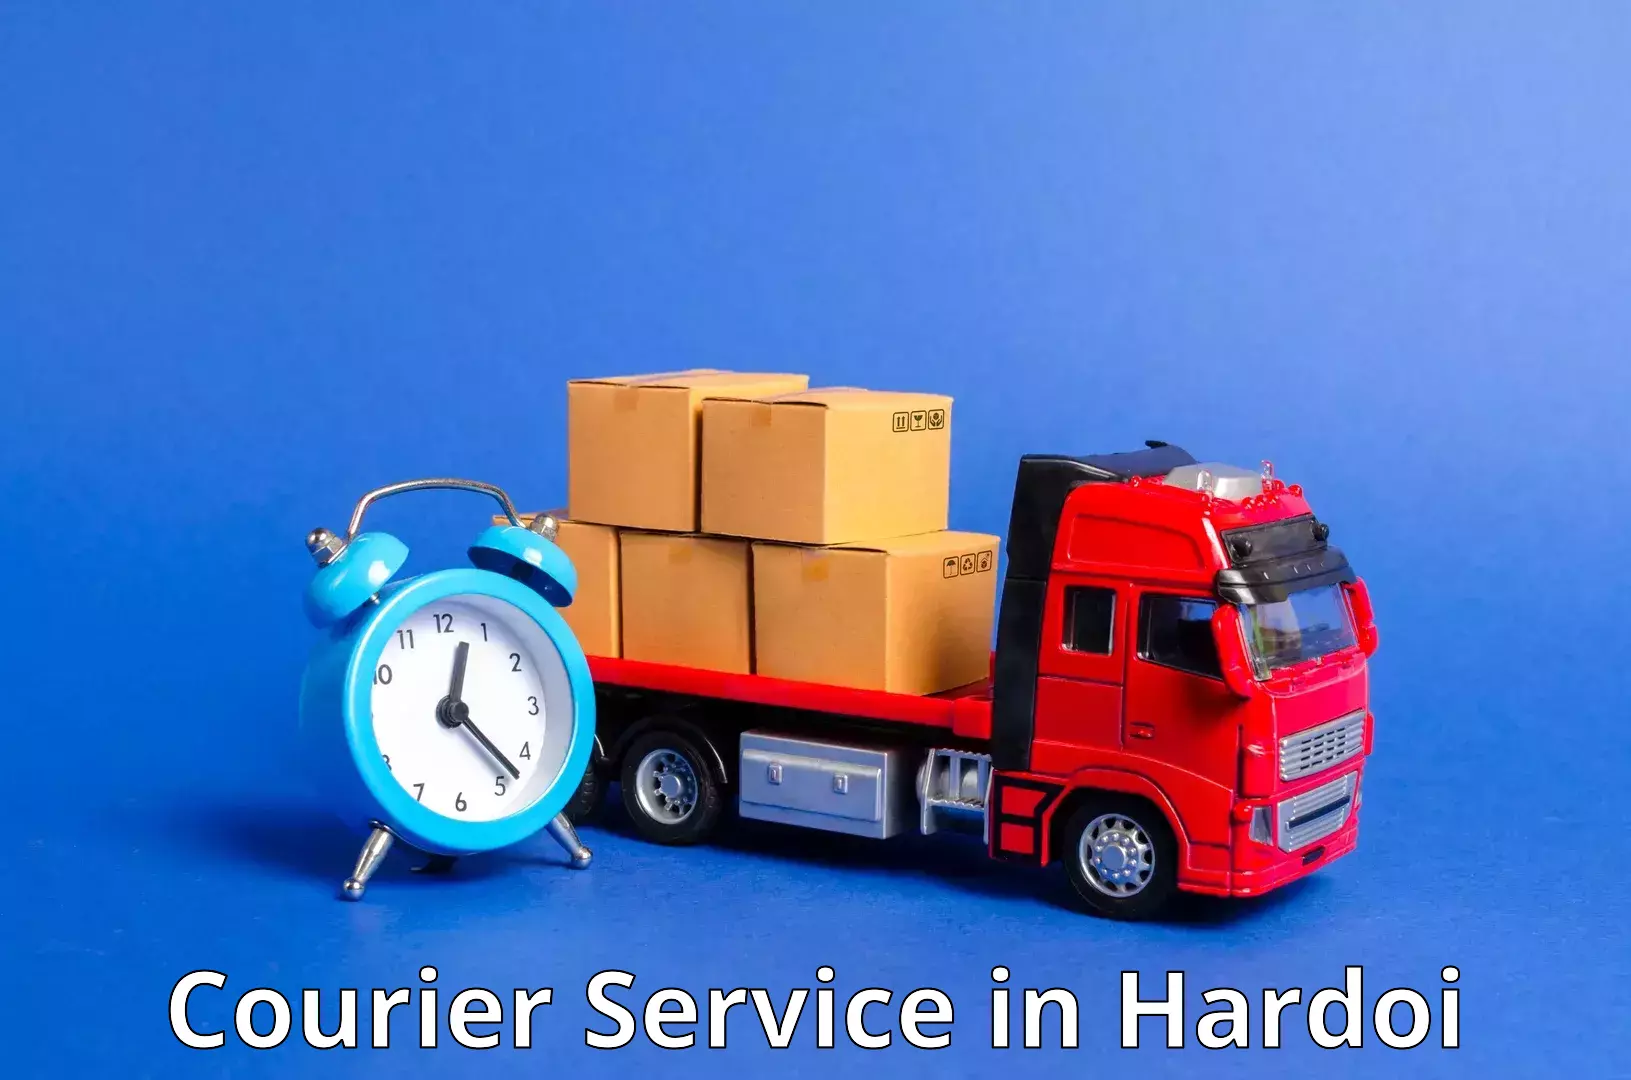 Overnight delivery services in Hardoi